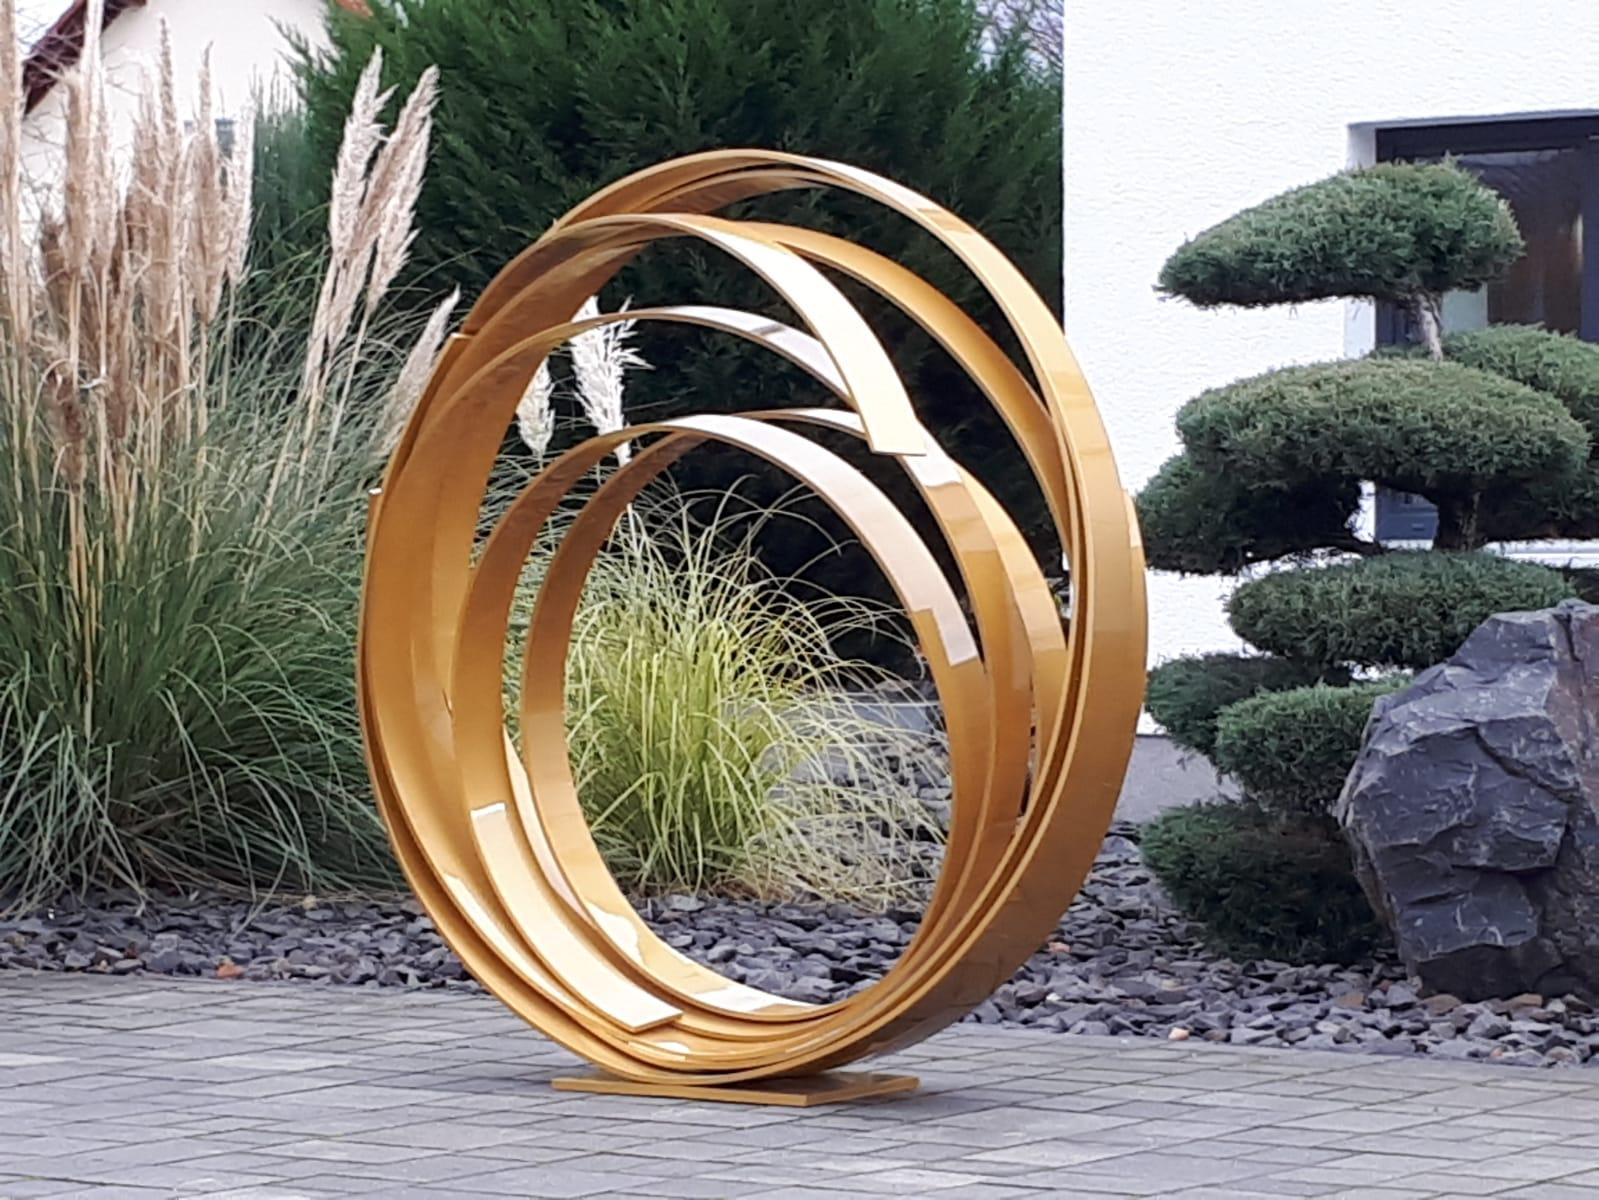 Golden Orbit Contemporary Aluminum  sculpture for Outdoors - Sculpture by Kuno Vollet